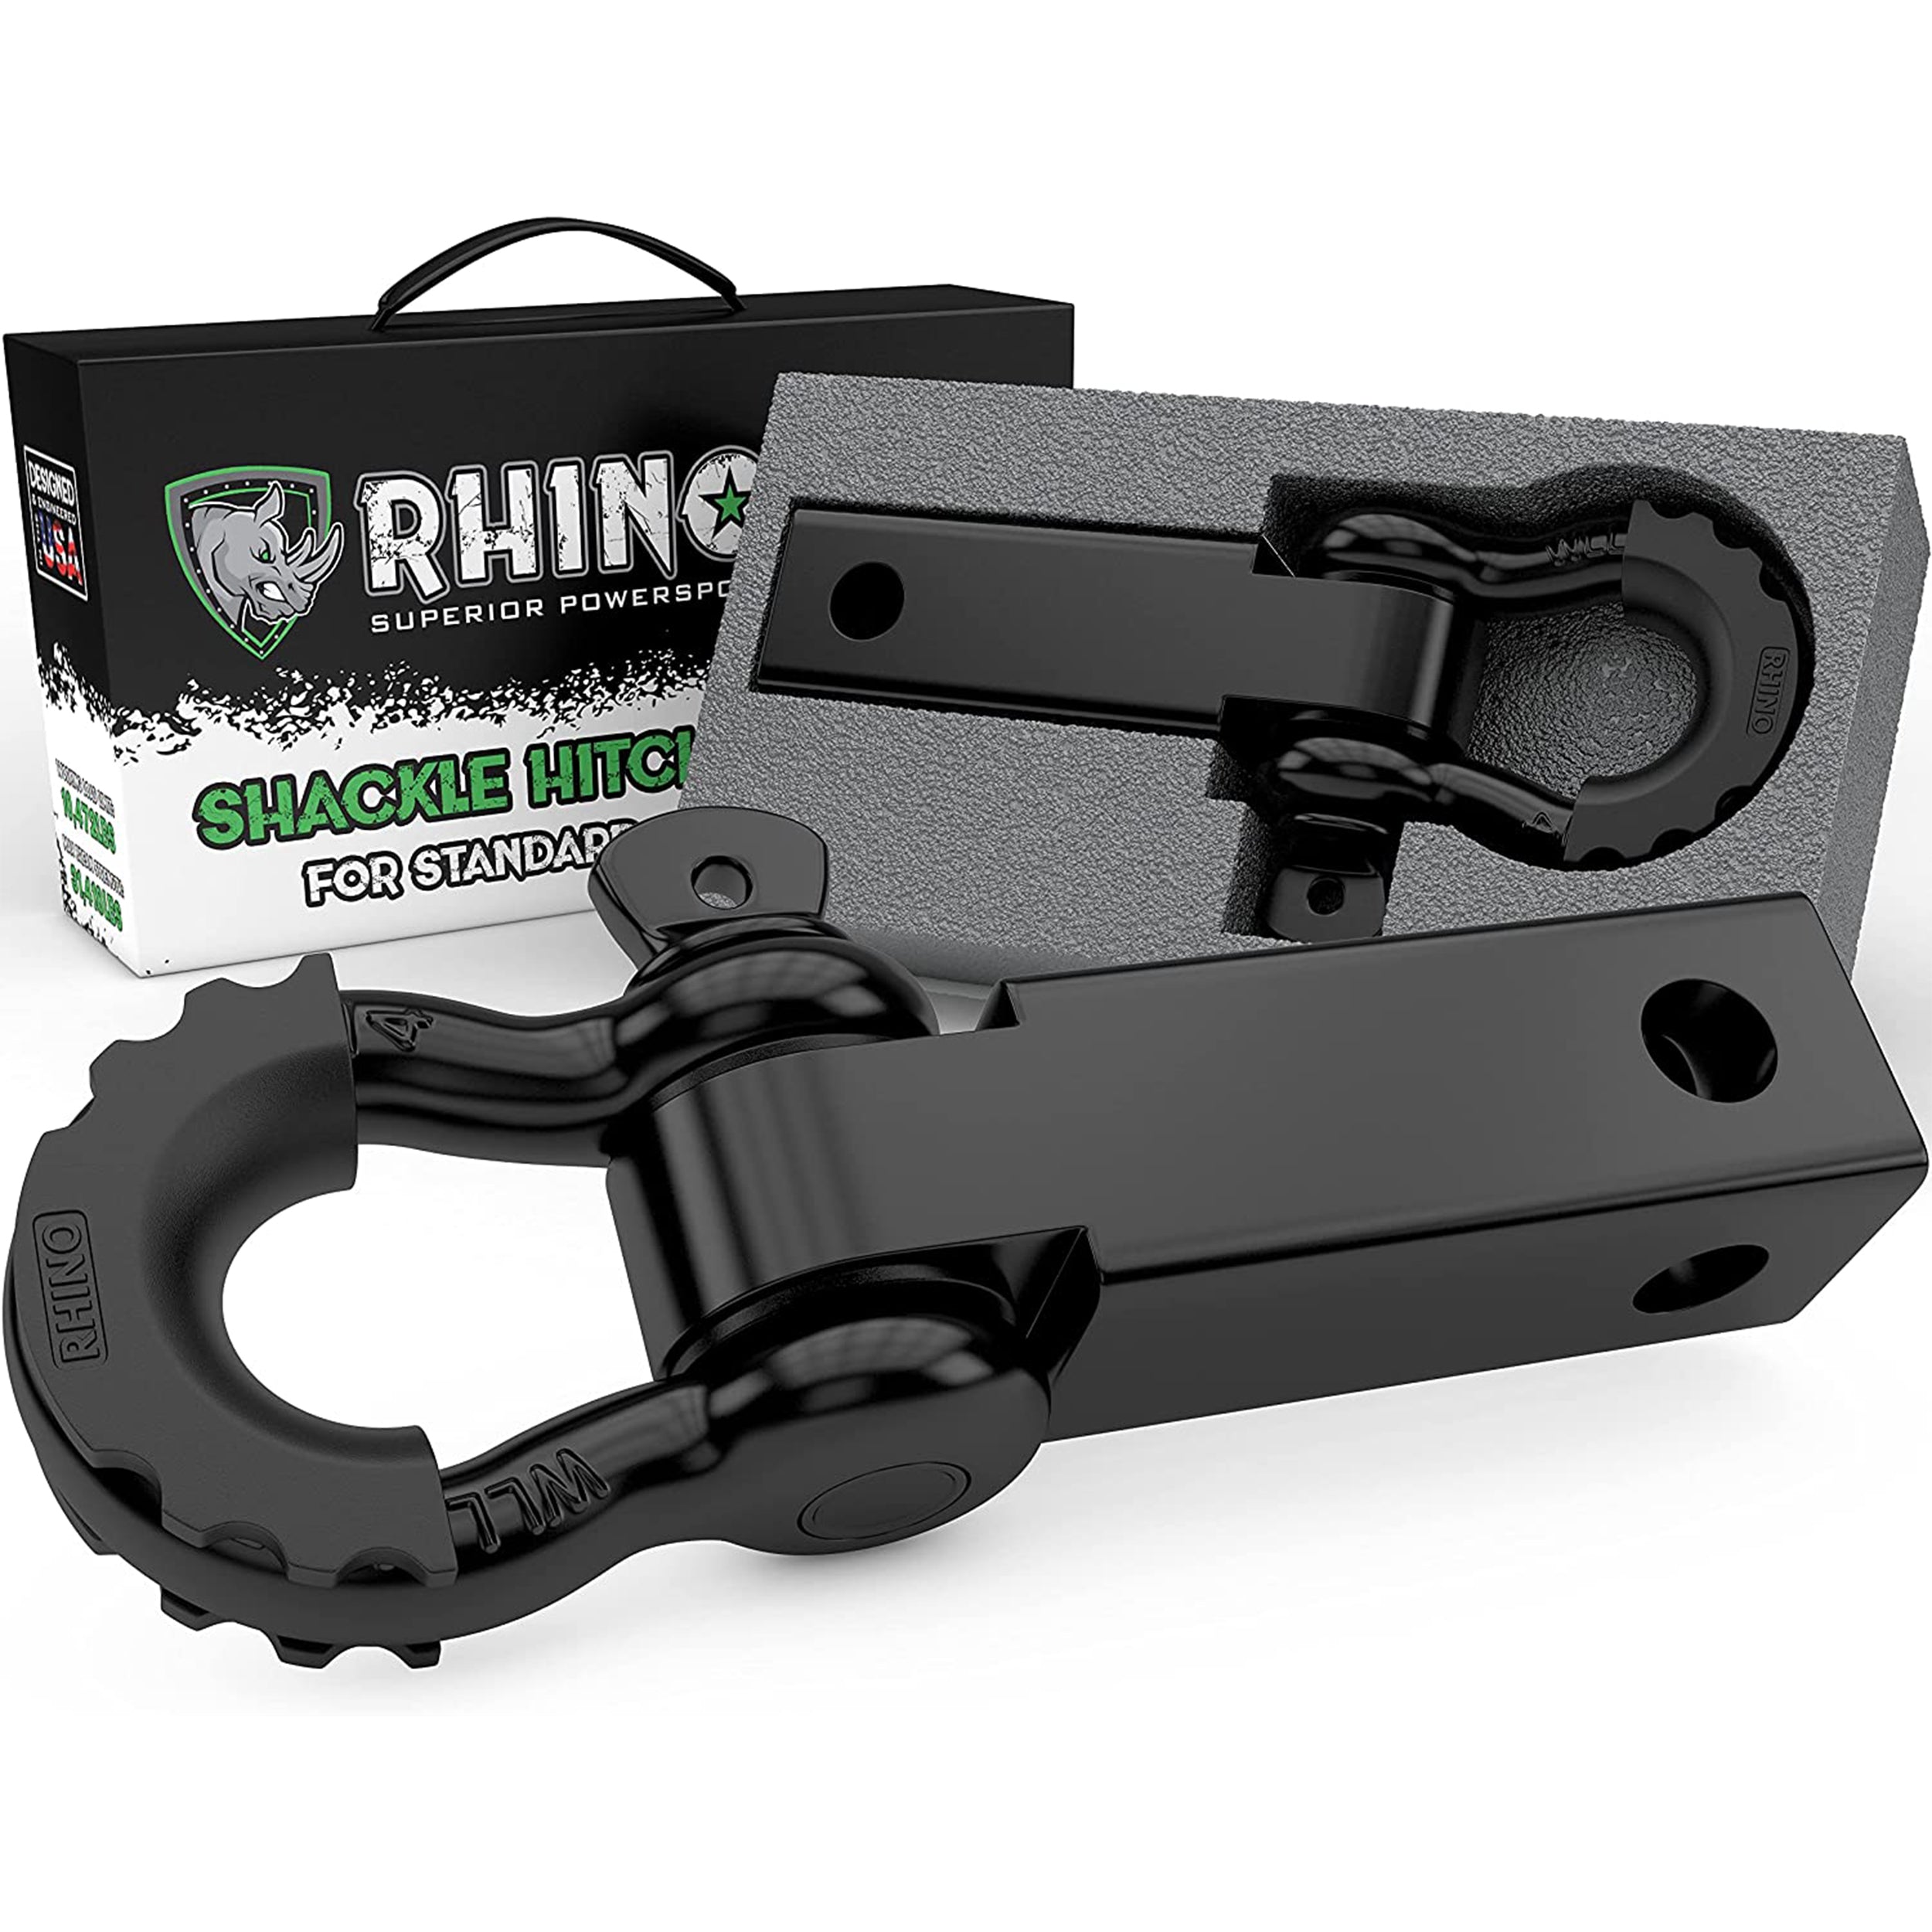 D-Ring Shackle Set 3/4 Rhino USA – Overland Limits